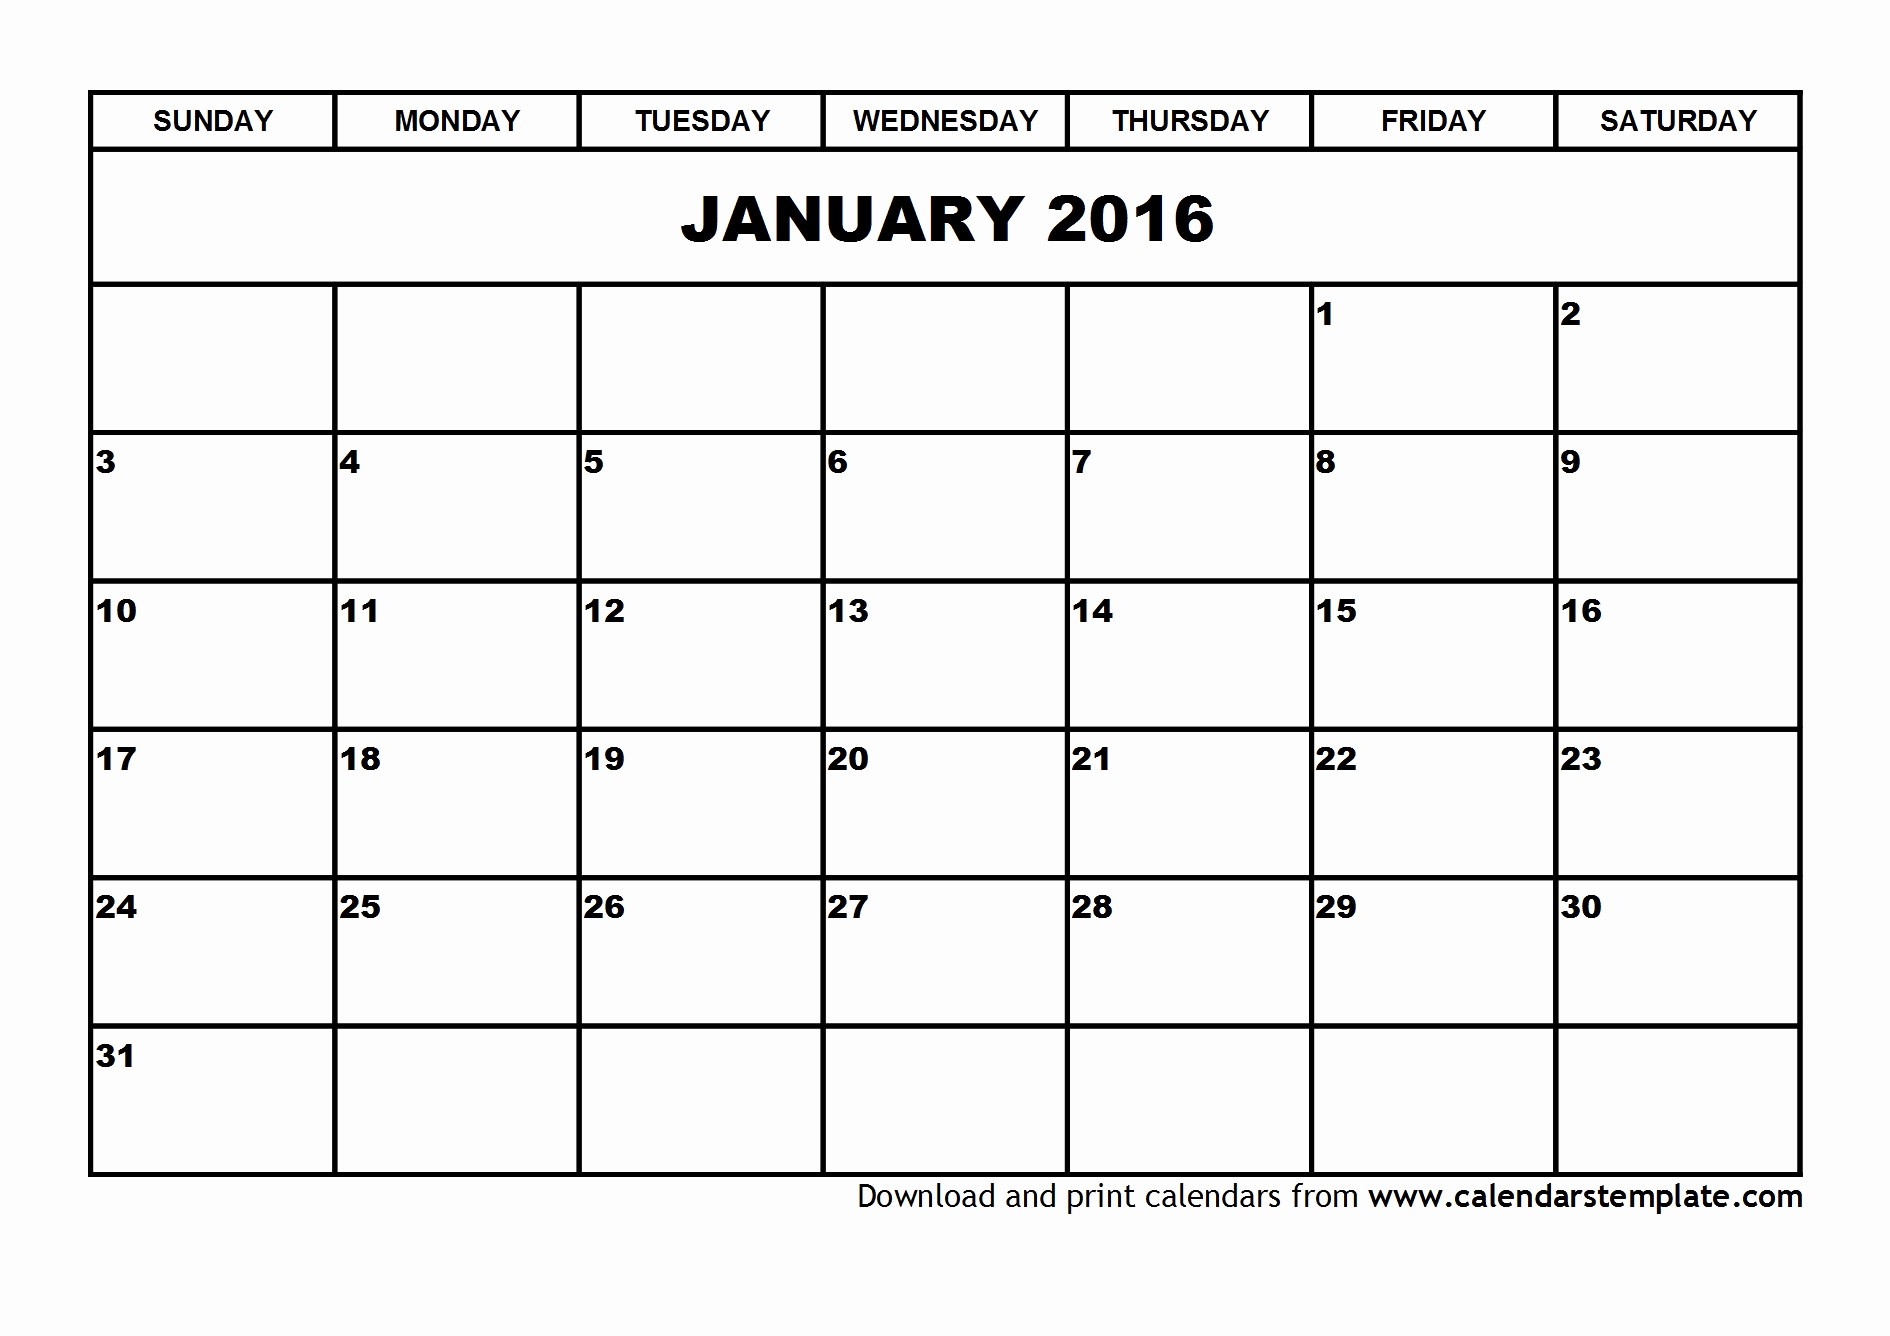 January 2016 Calendar Template Word Awesome 9 Best Of 2016 Calendar January Printable Free